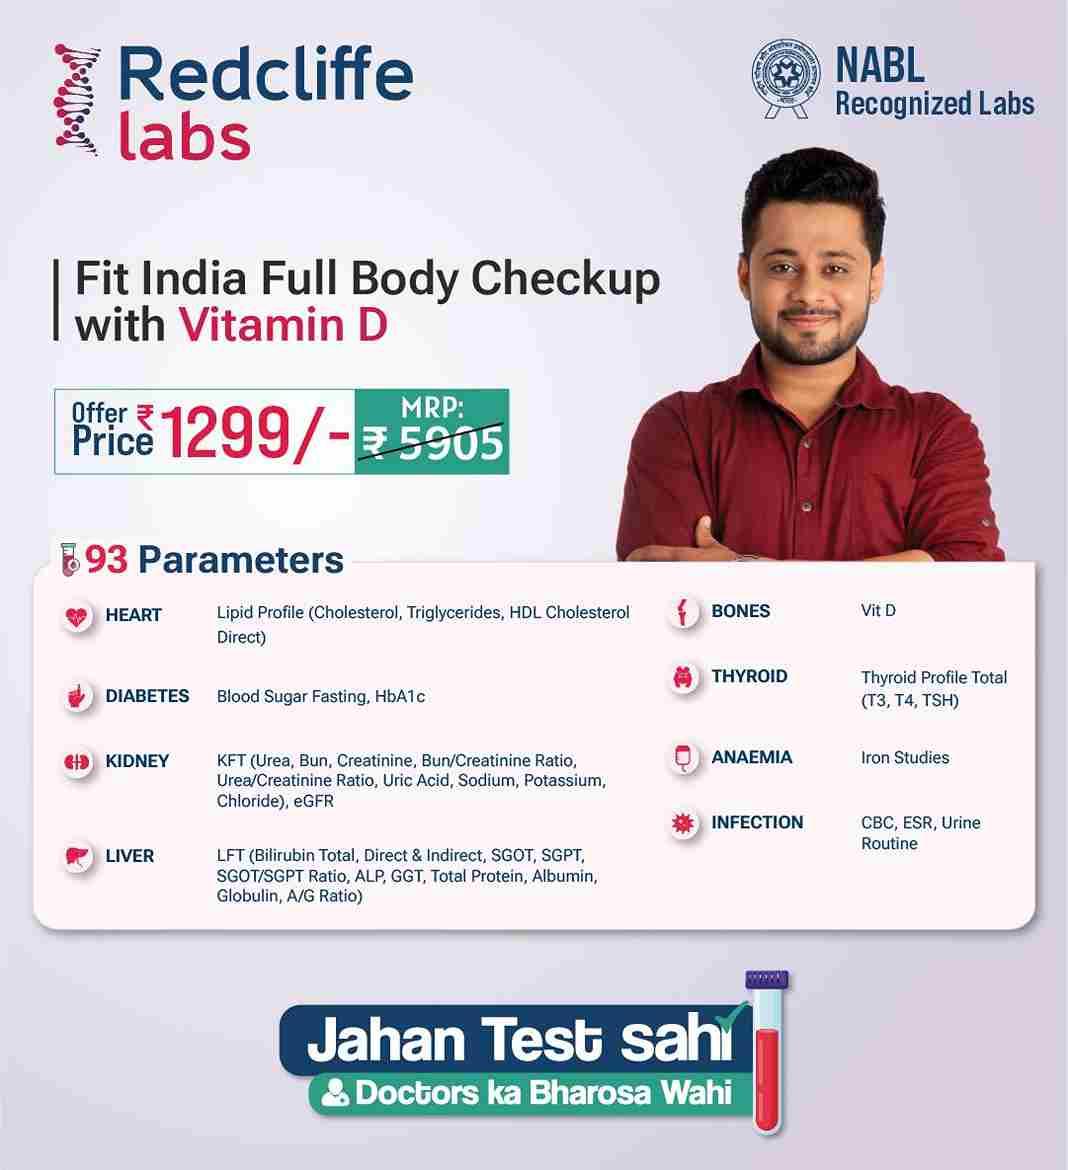 Fit India Full Body Checkup with Vitamin D in Delhi